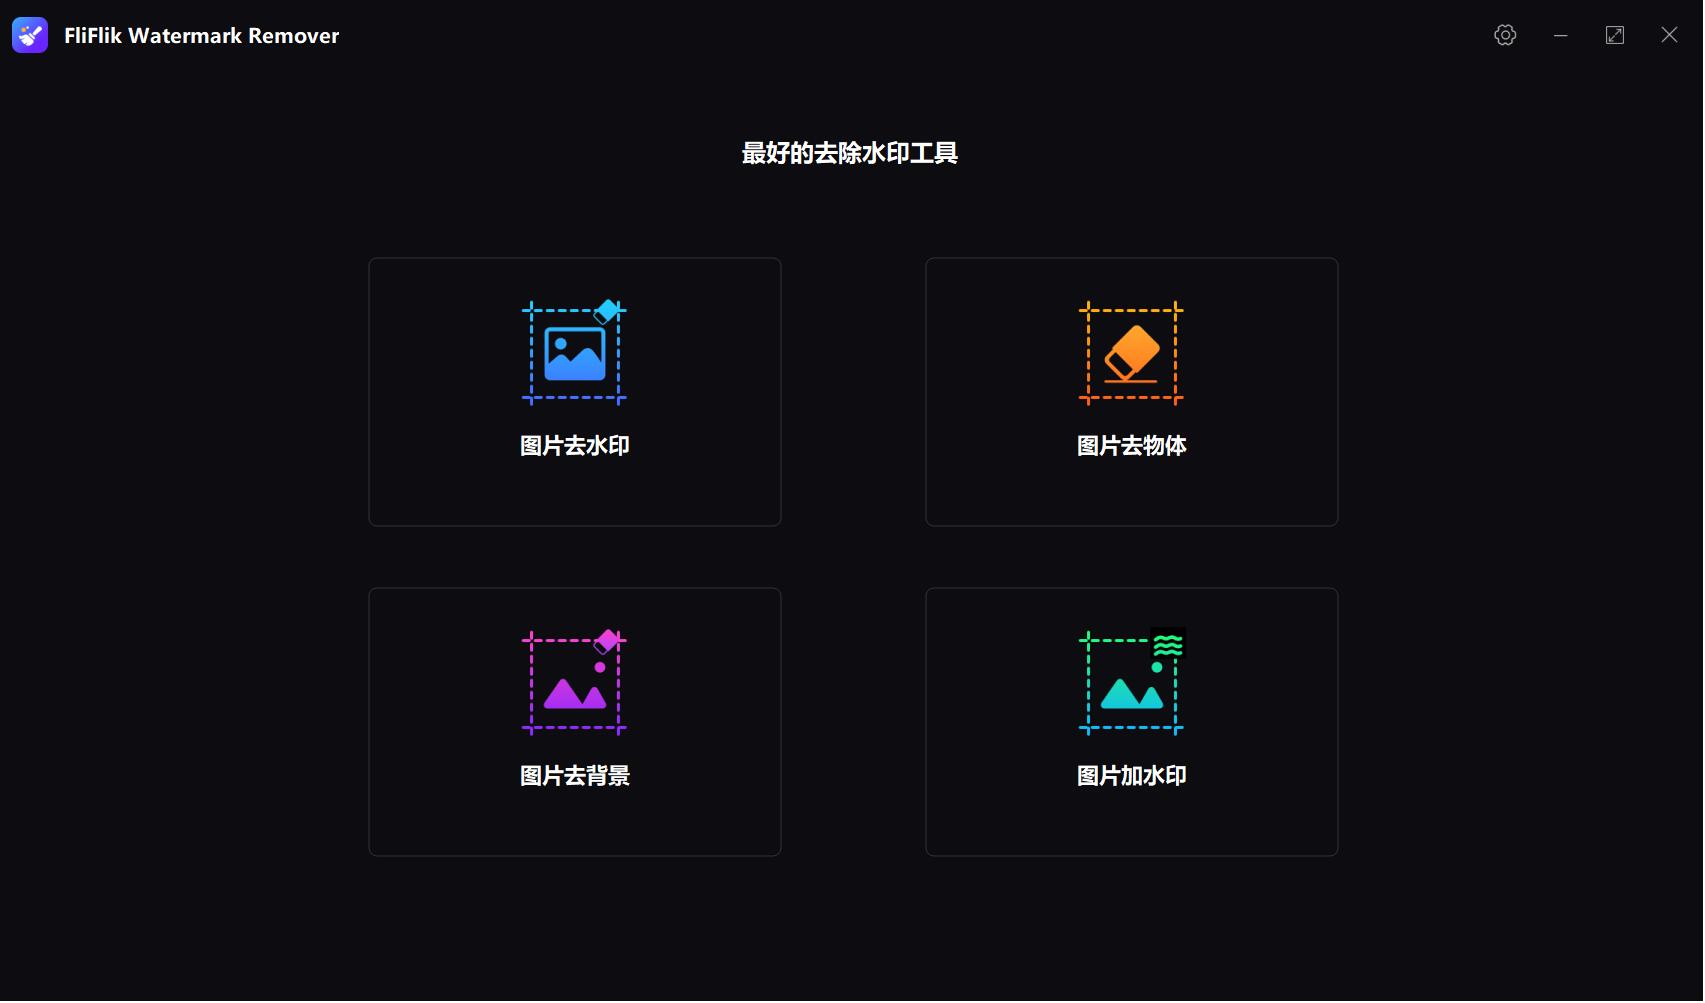 FliFlik Watermark Remover图片水印去除器 v6.0.0 中文绿色多语版